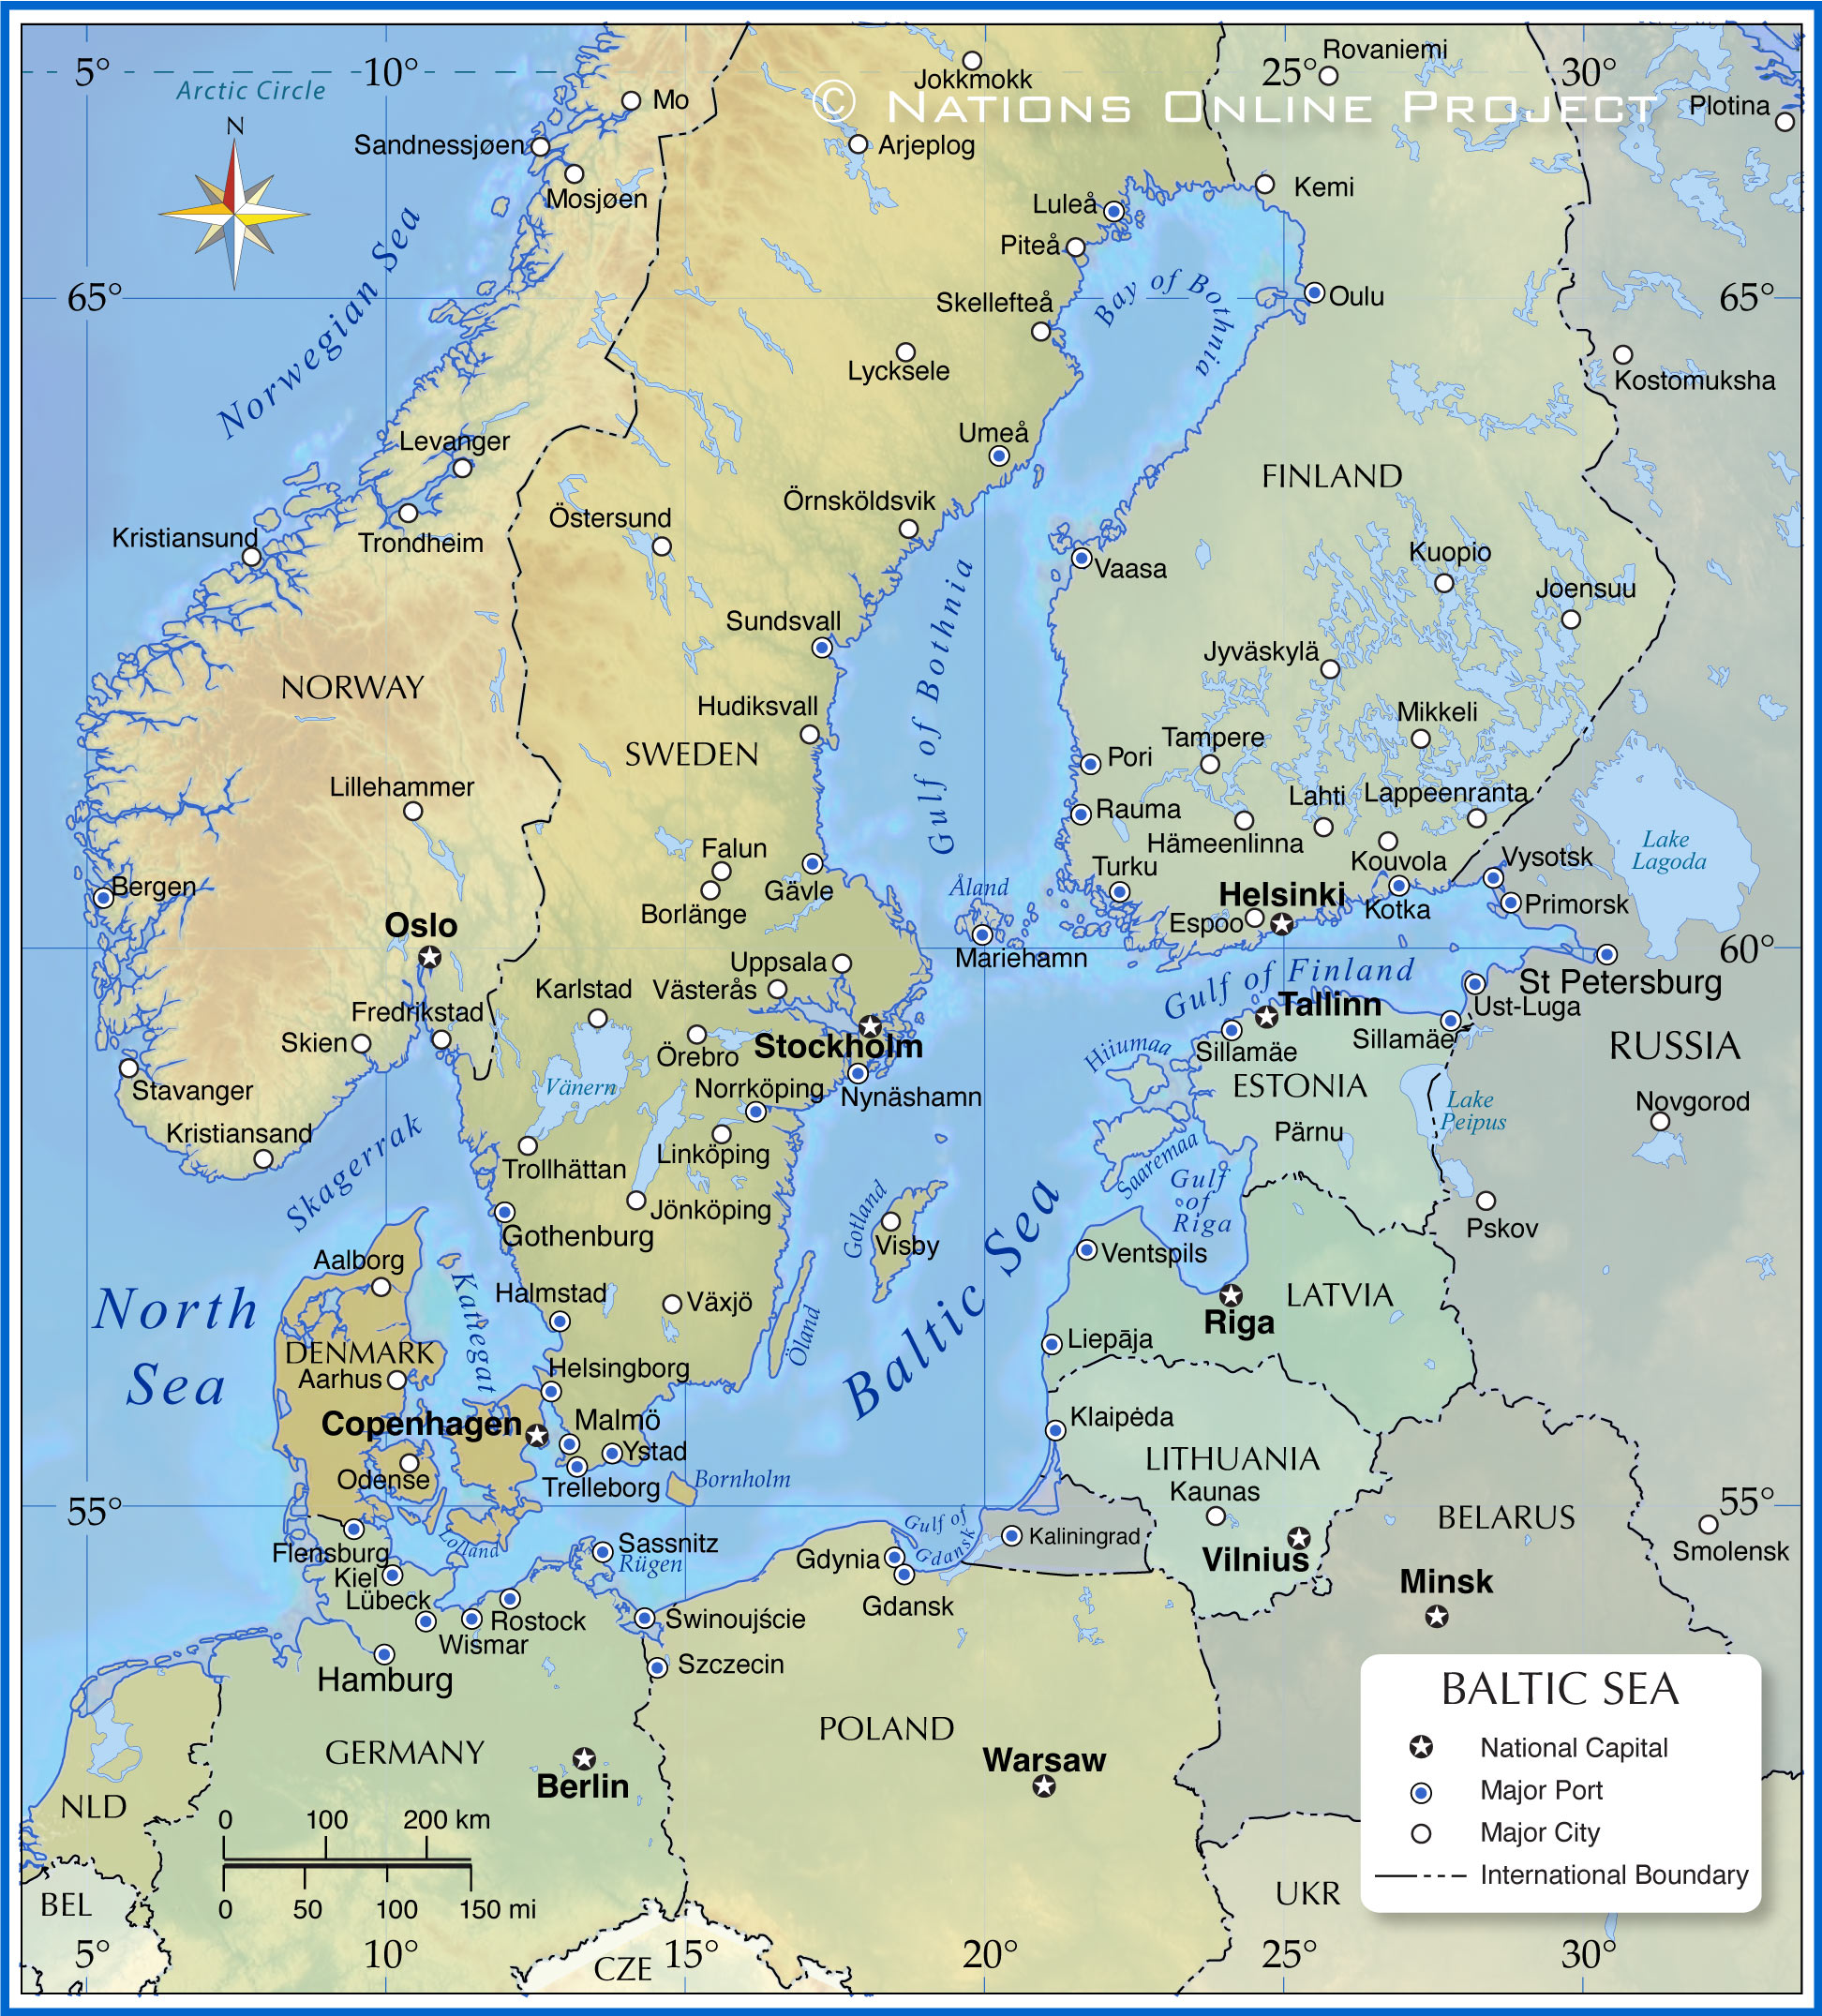 norwegian sea world map